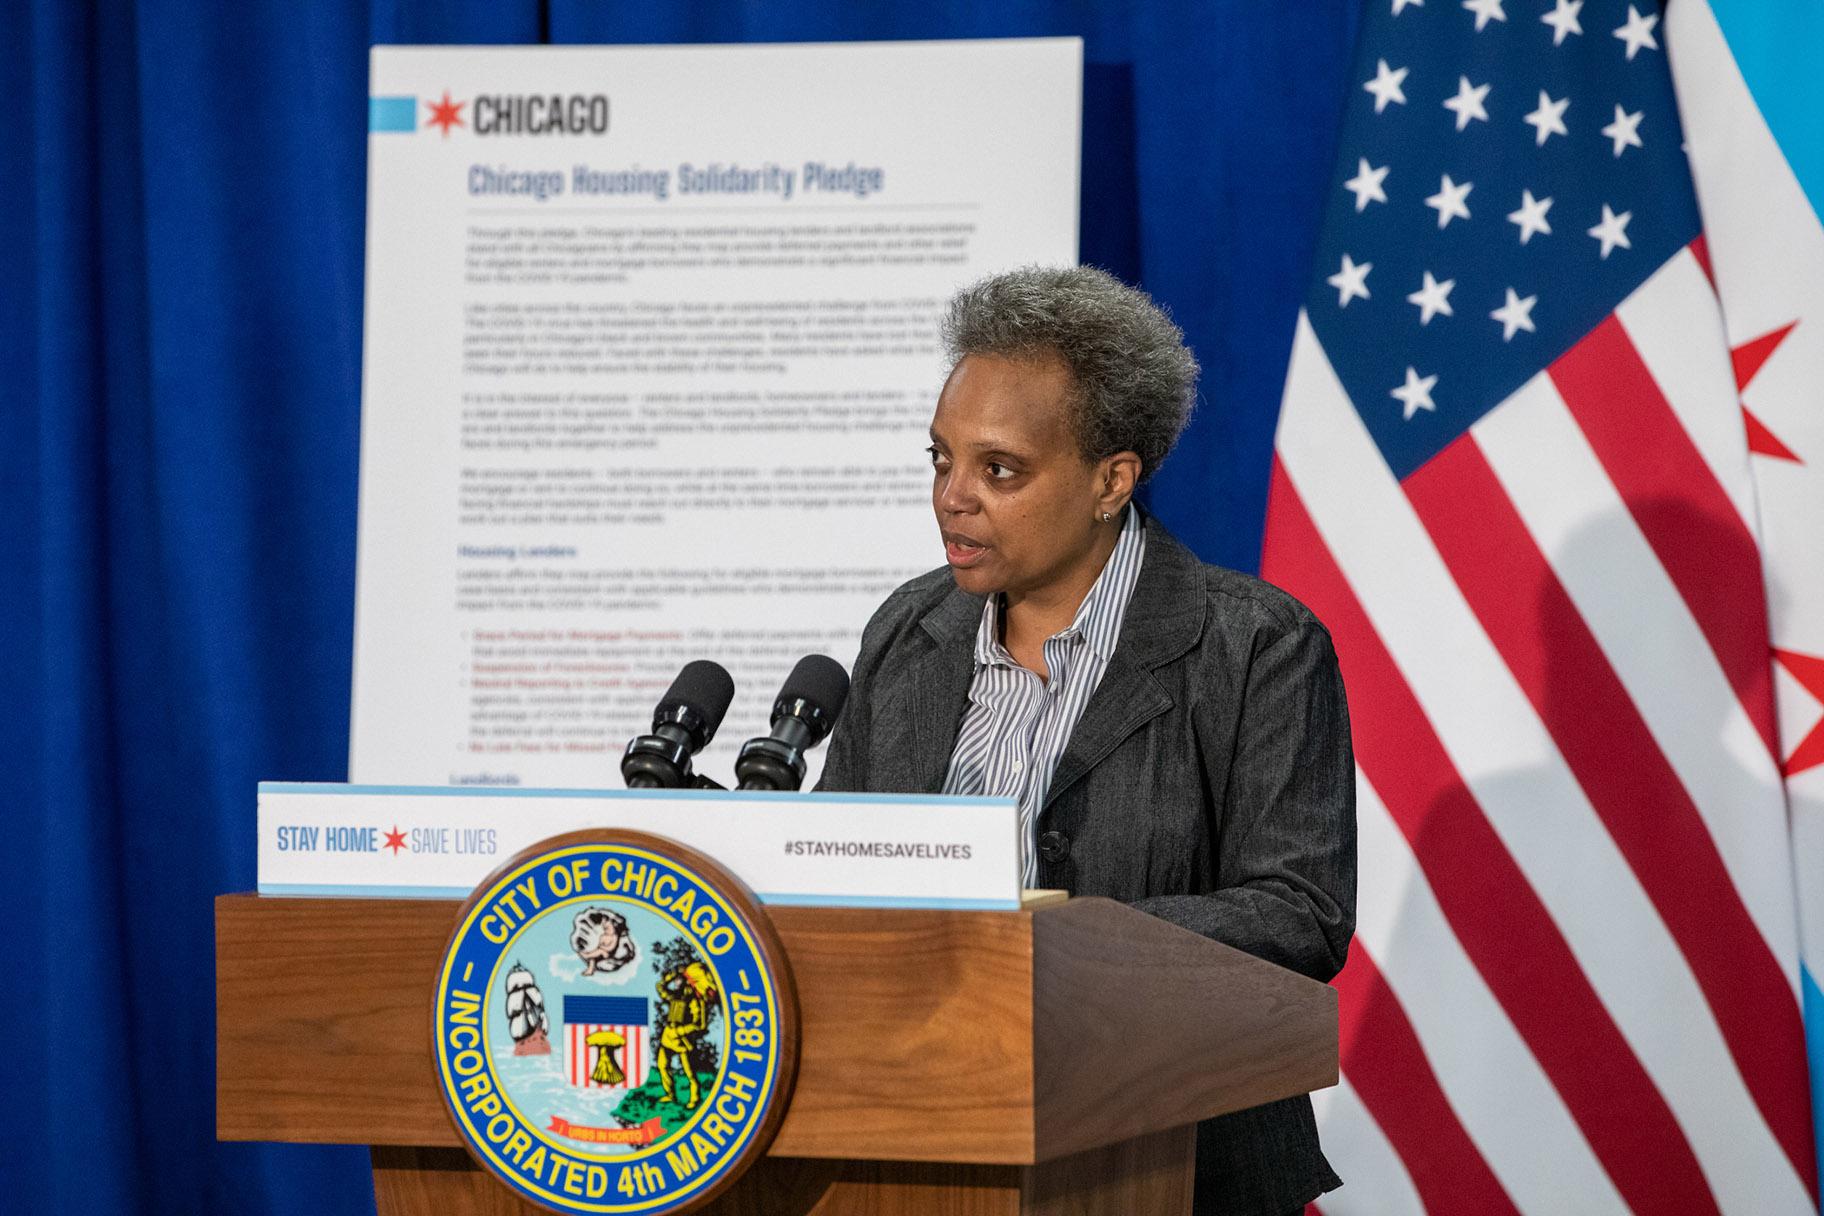 Mayor Lori Lightfoot announces the Chicago Housing Solidarity Pledge on Wednesday, April 29, 2020. (@chicagosmayor / Twitter)